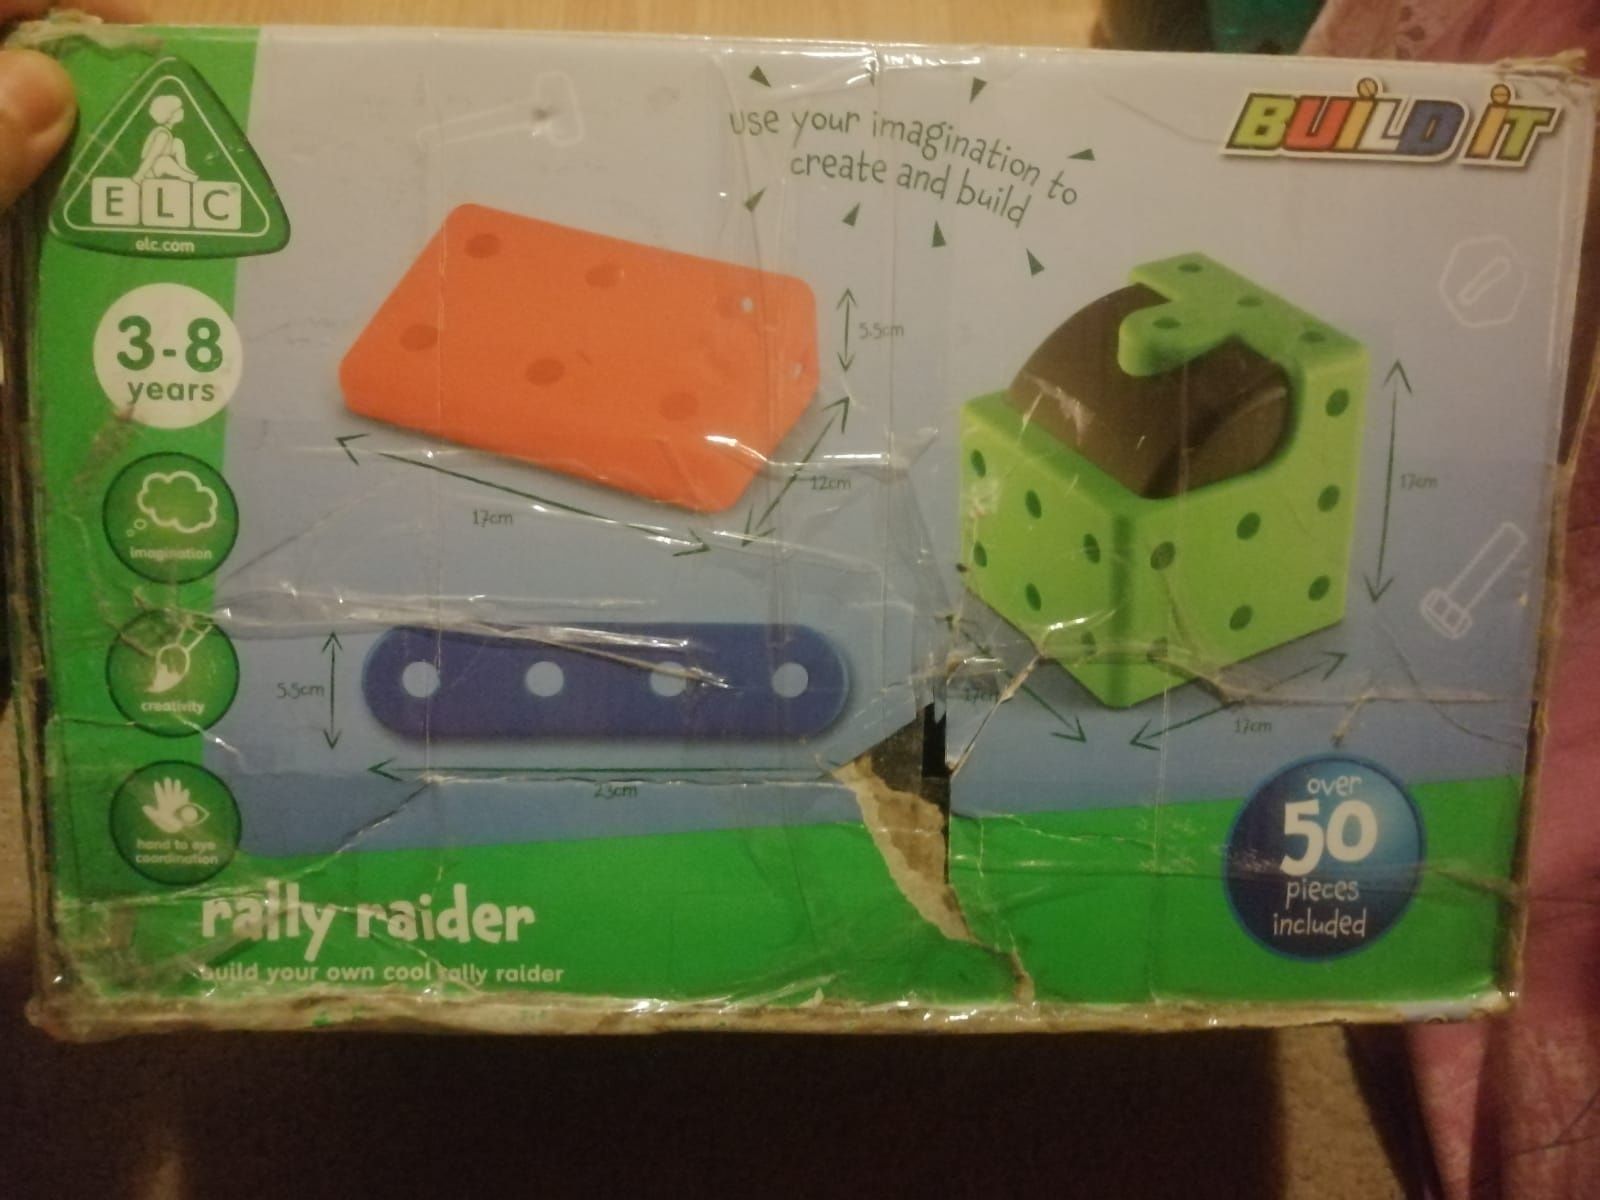 Build it rally raider